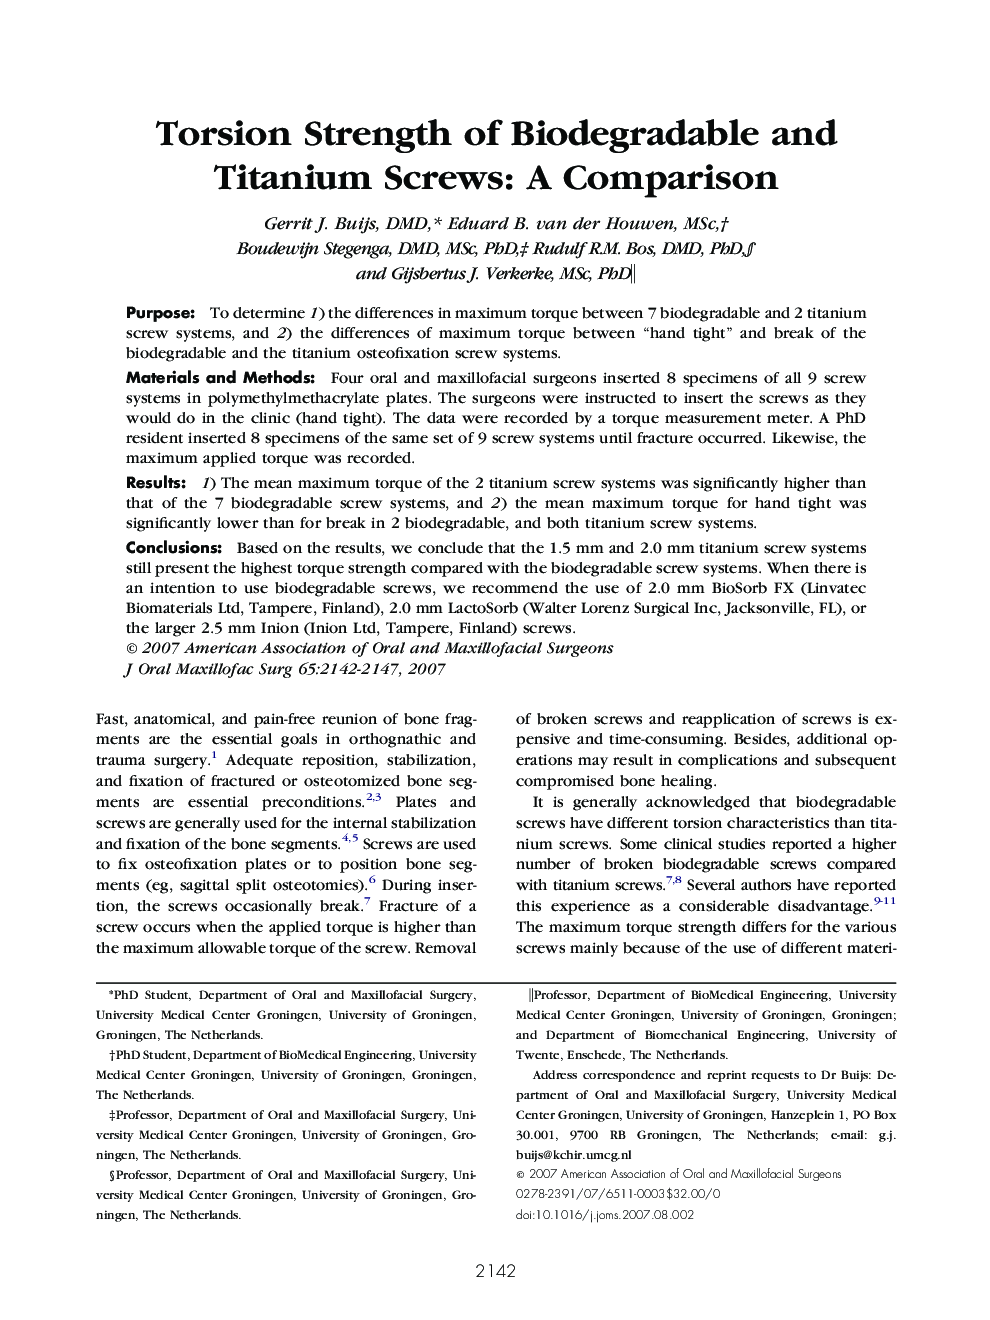 Torsion Strength of Biodegradable and Titanium Screws: A Comparison